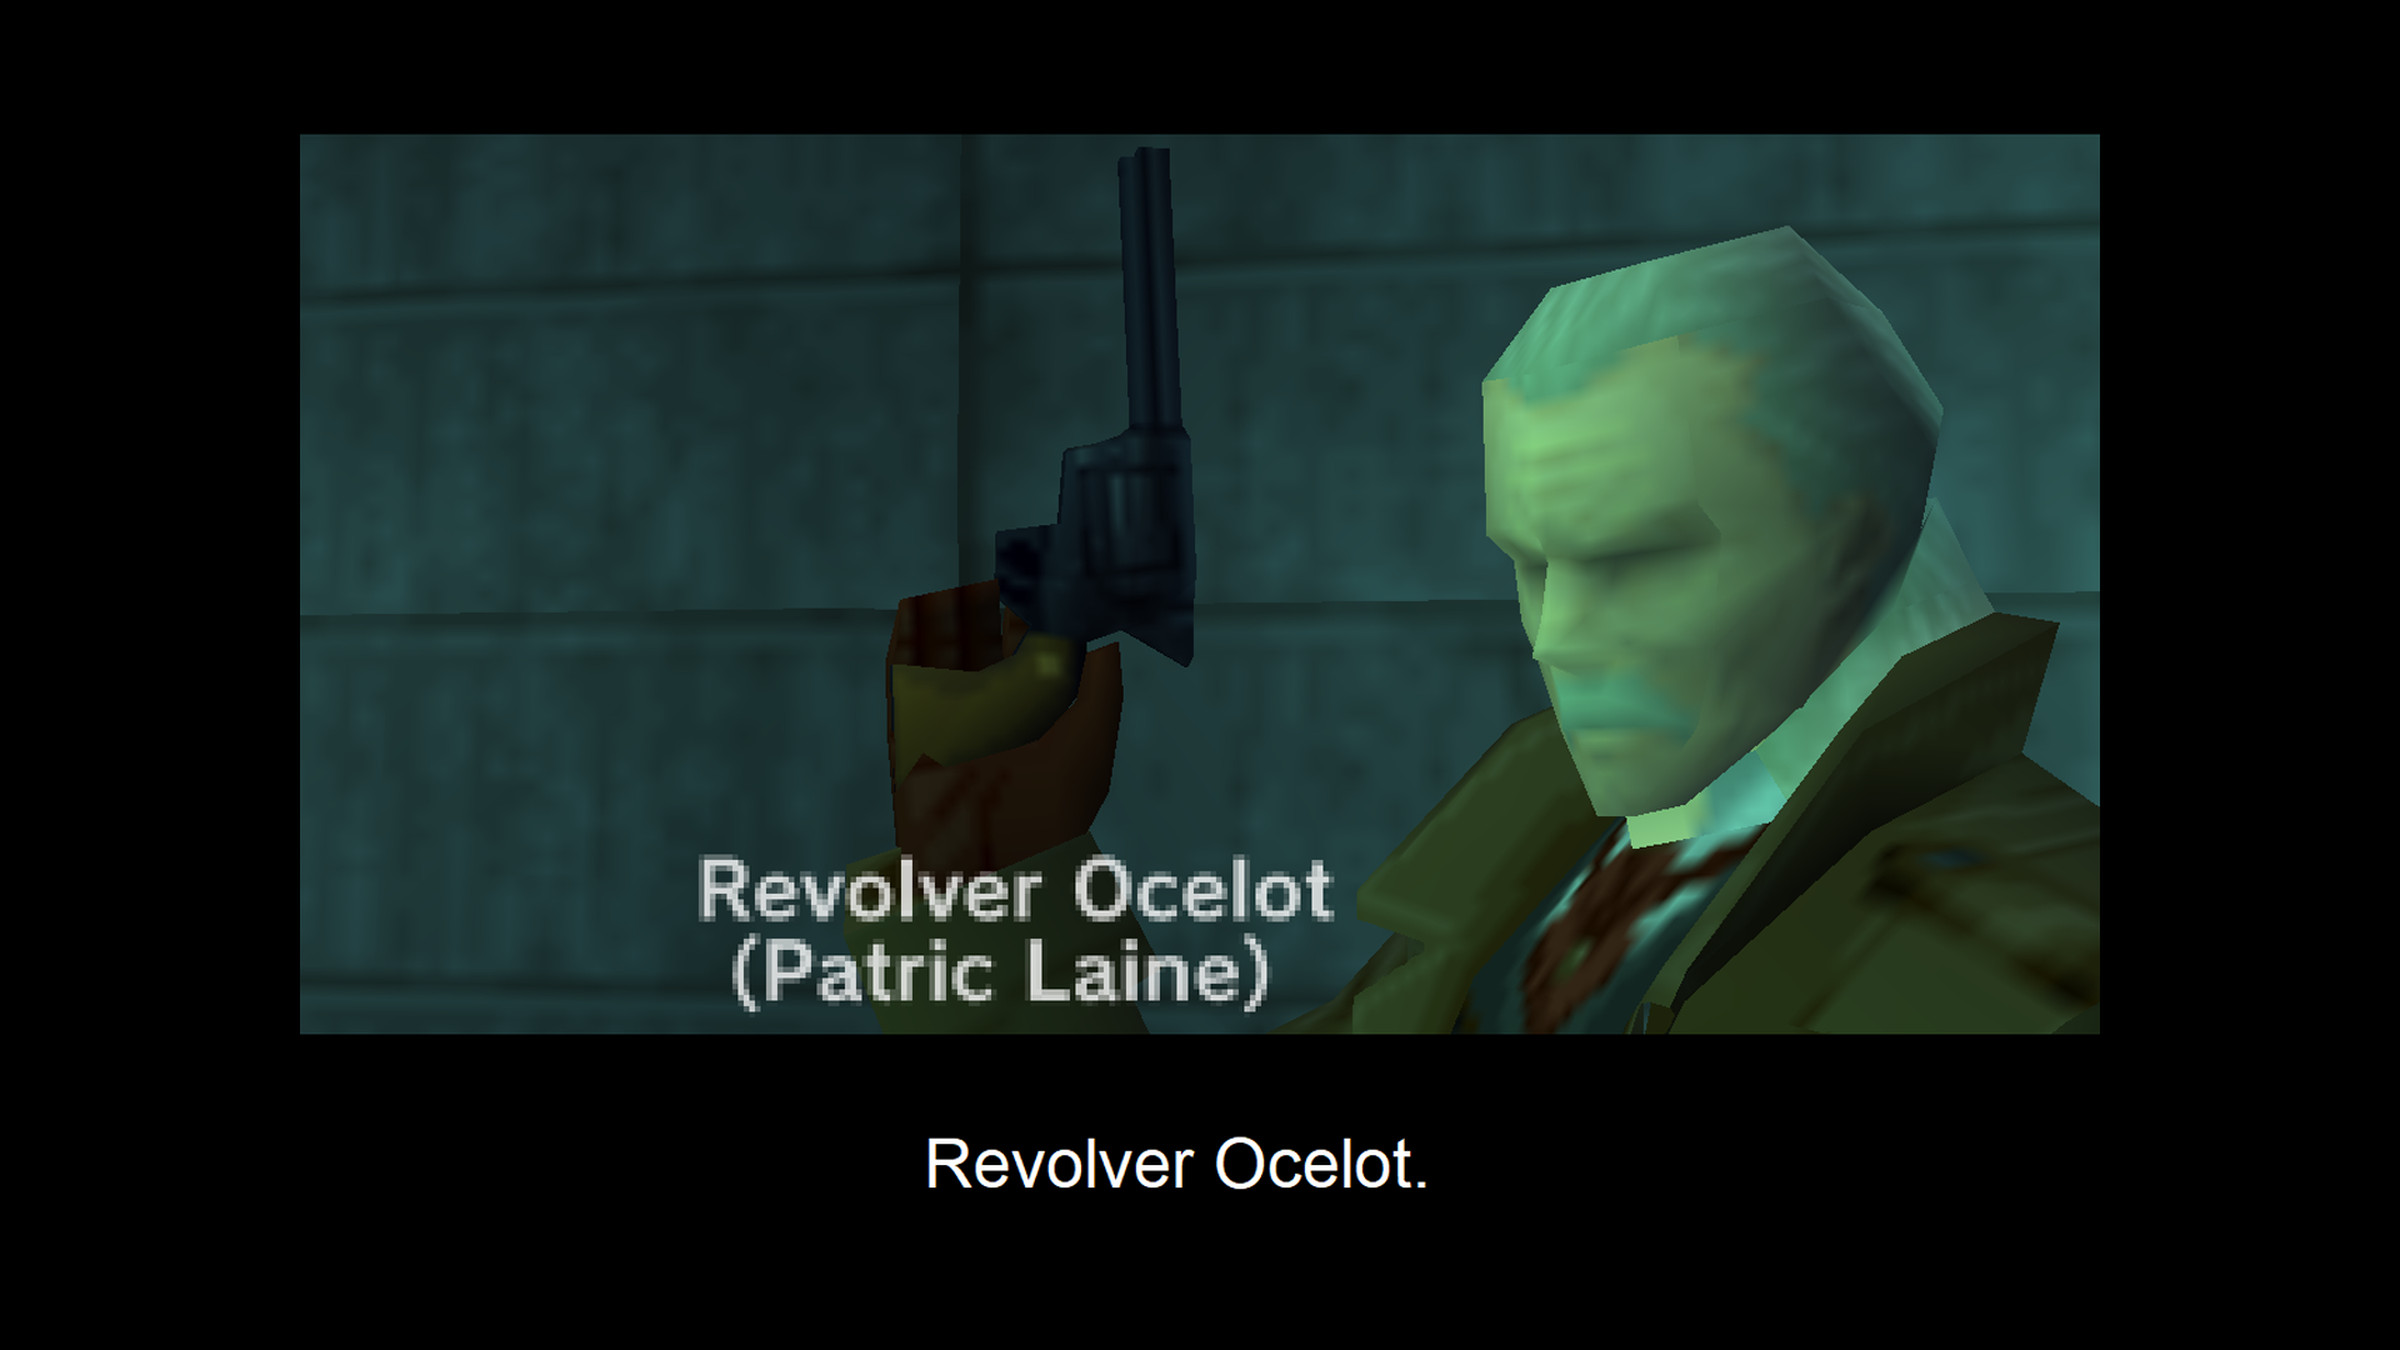 Revolver Ocelot has seen better days